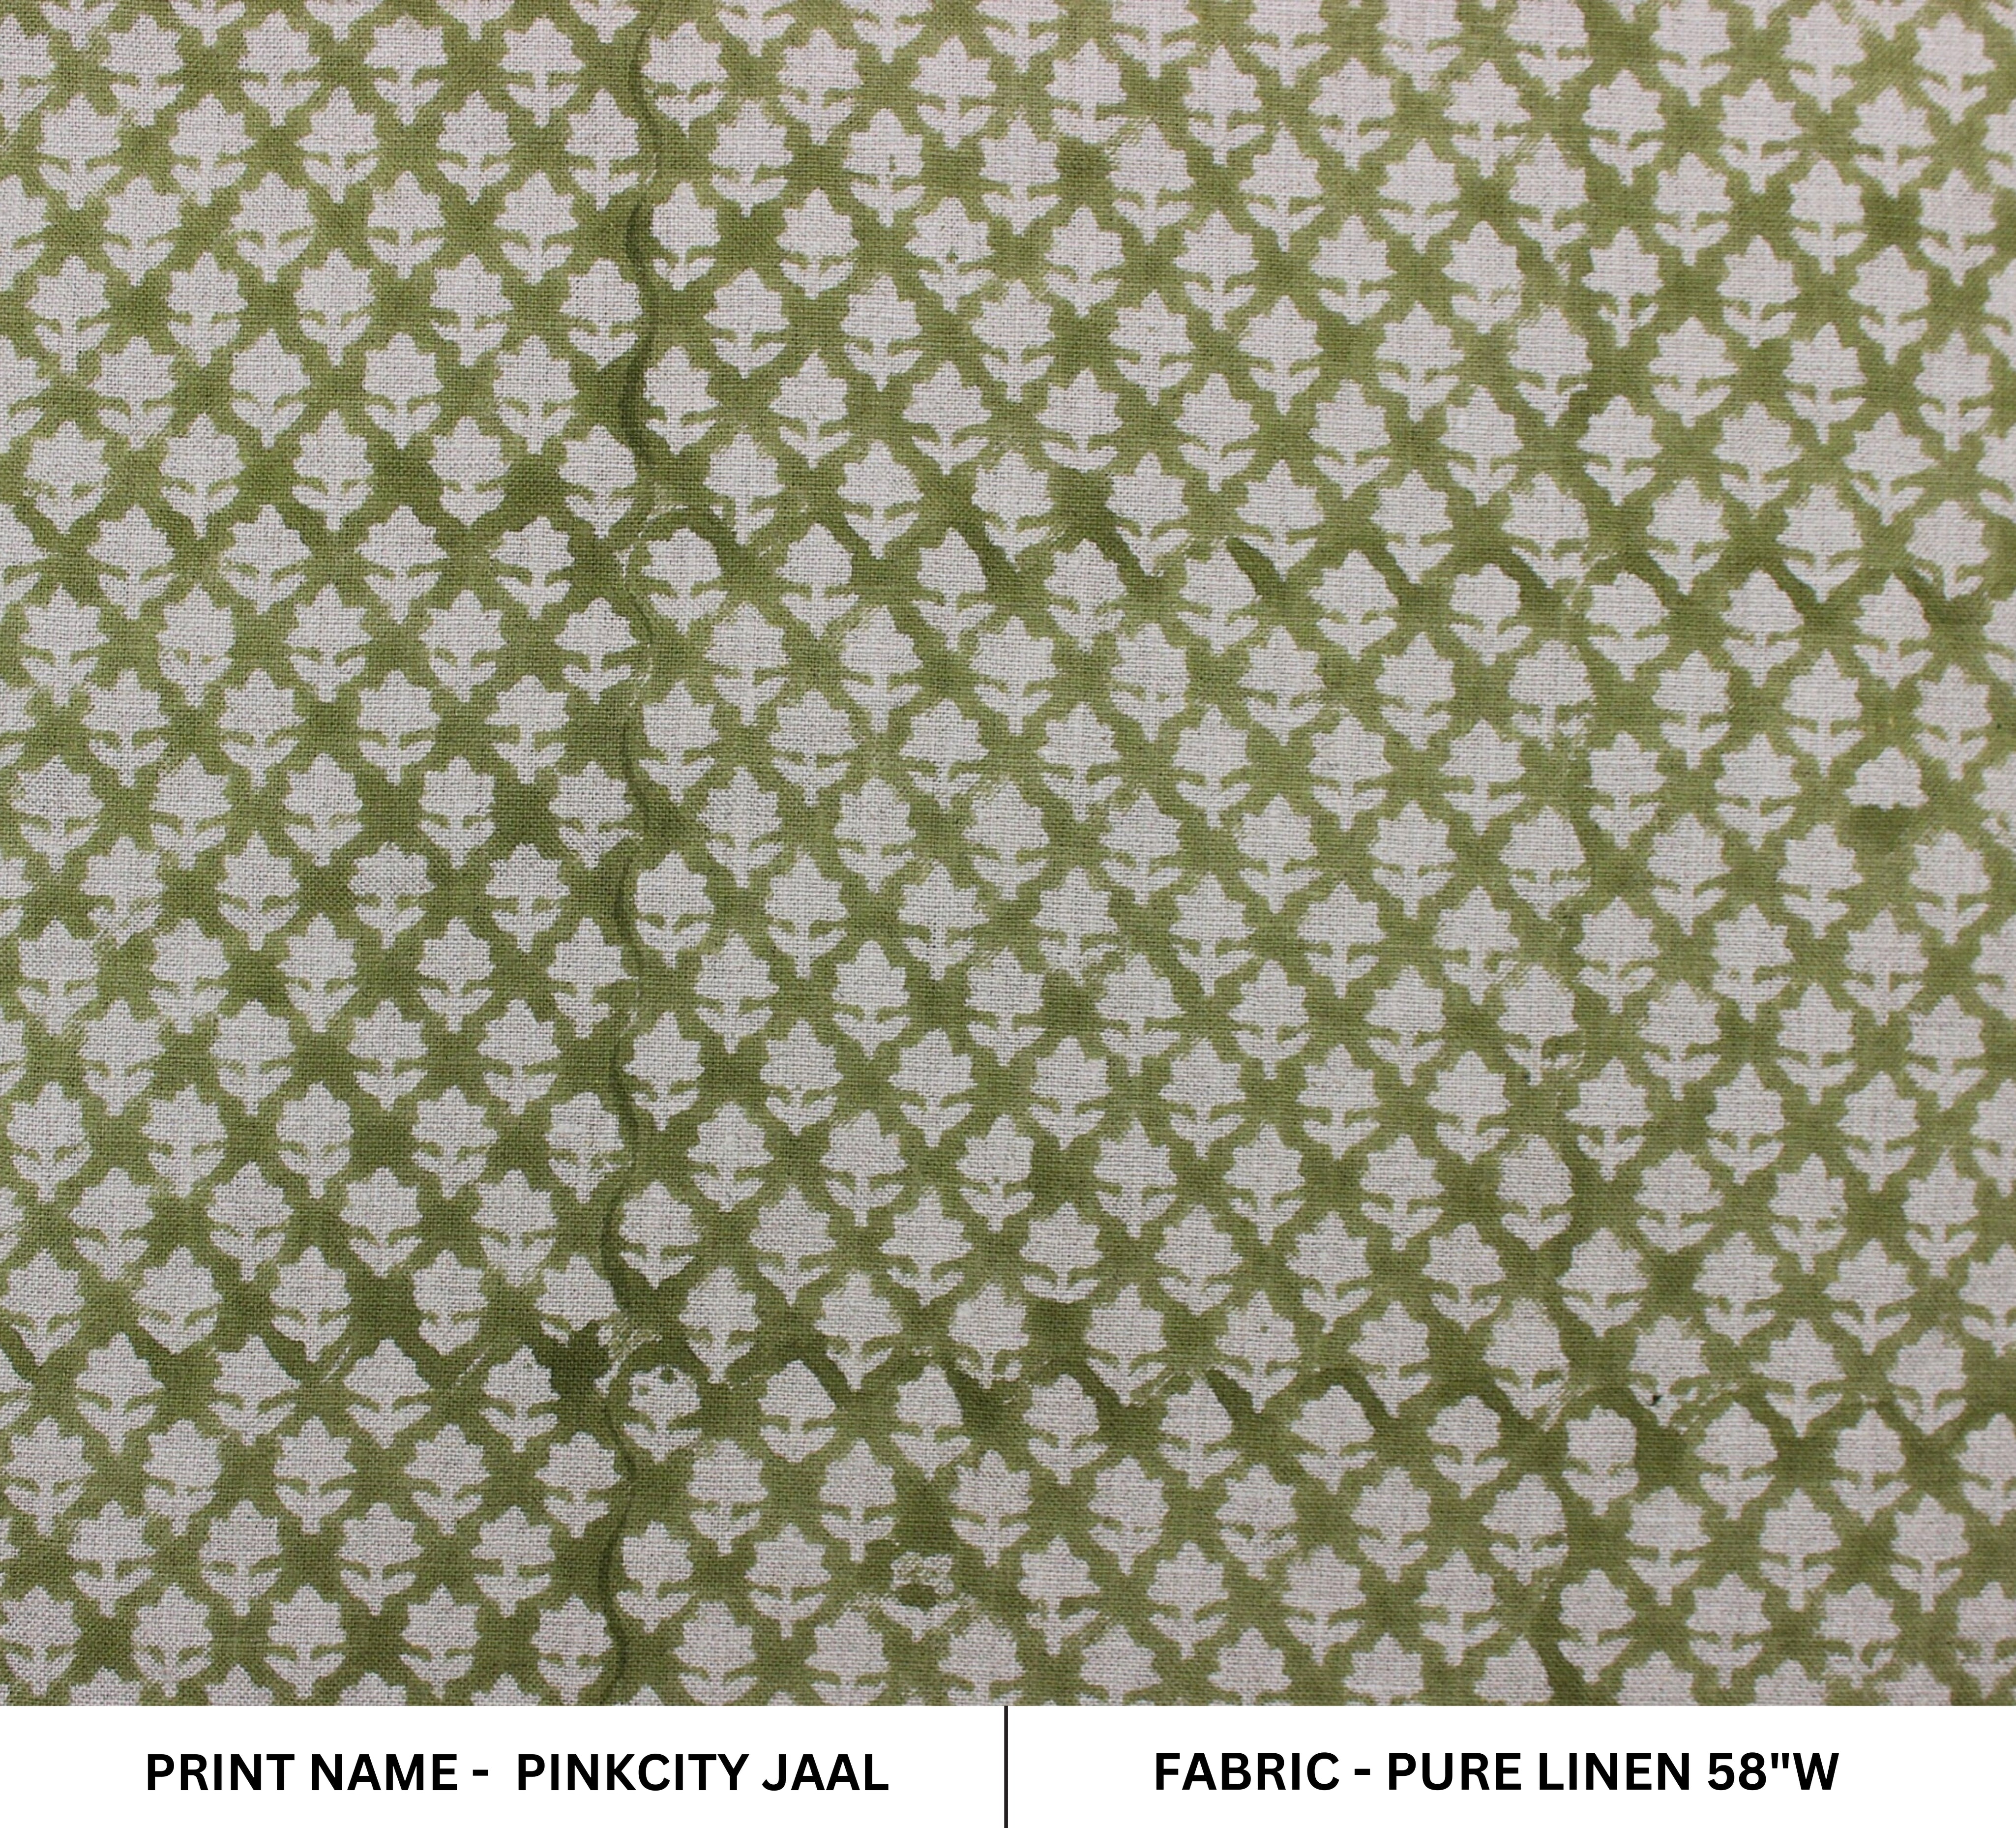 Block Print Linen Fabric, Pink City   Handmade Art Fabric, Block Print Fabric By The Yard, Indian Fabrics, Floral Print Fabric, Fabric For Cushions  Upholstery